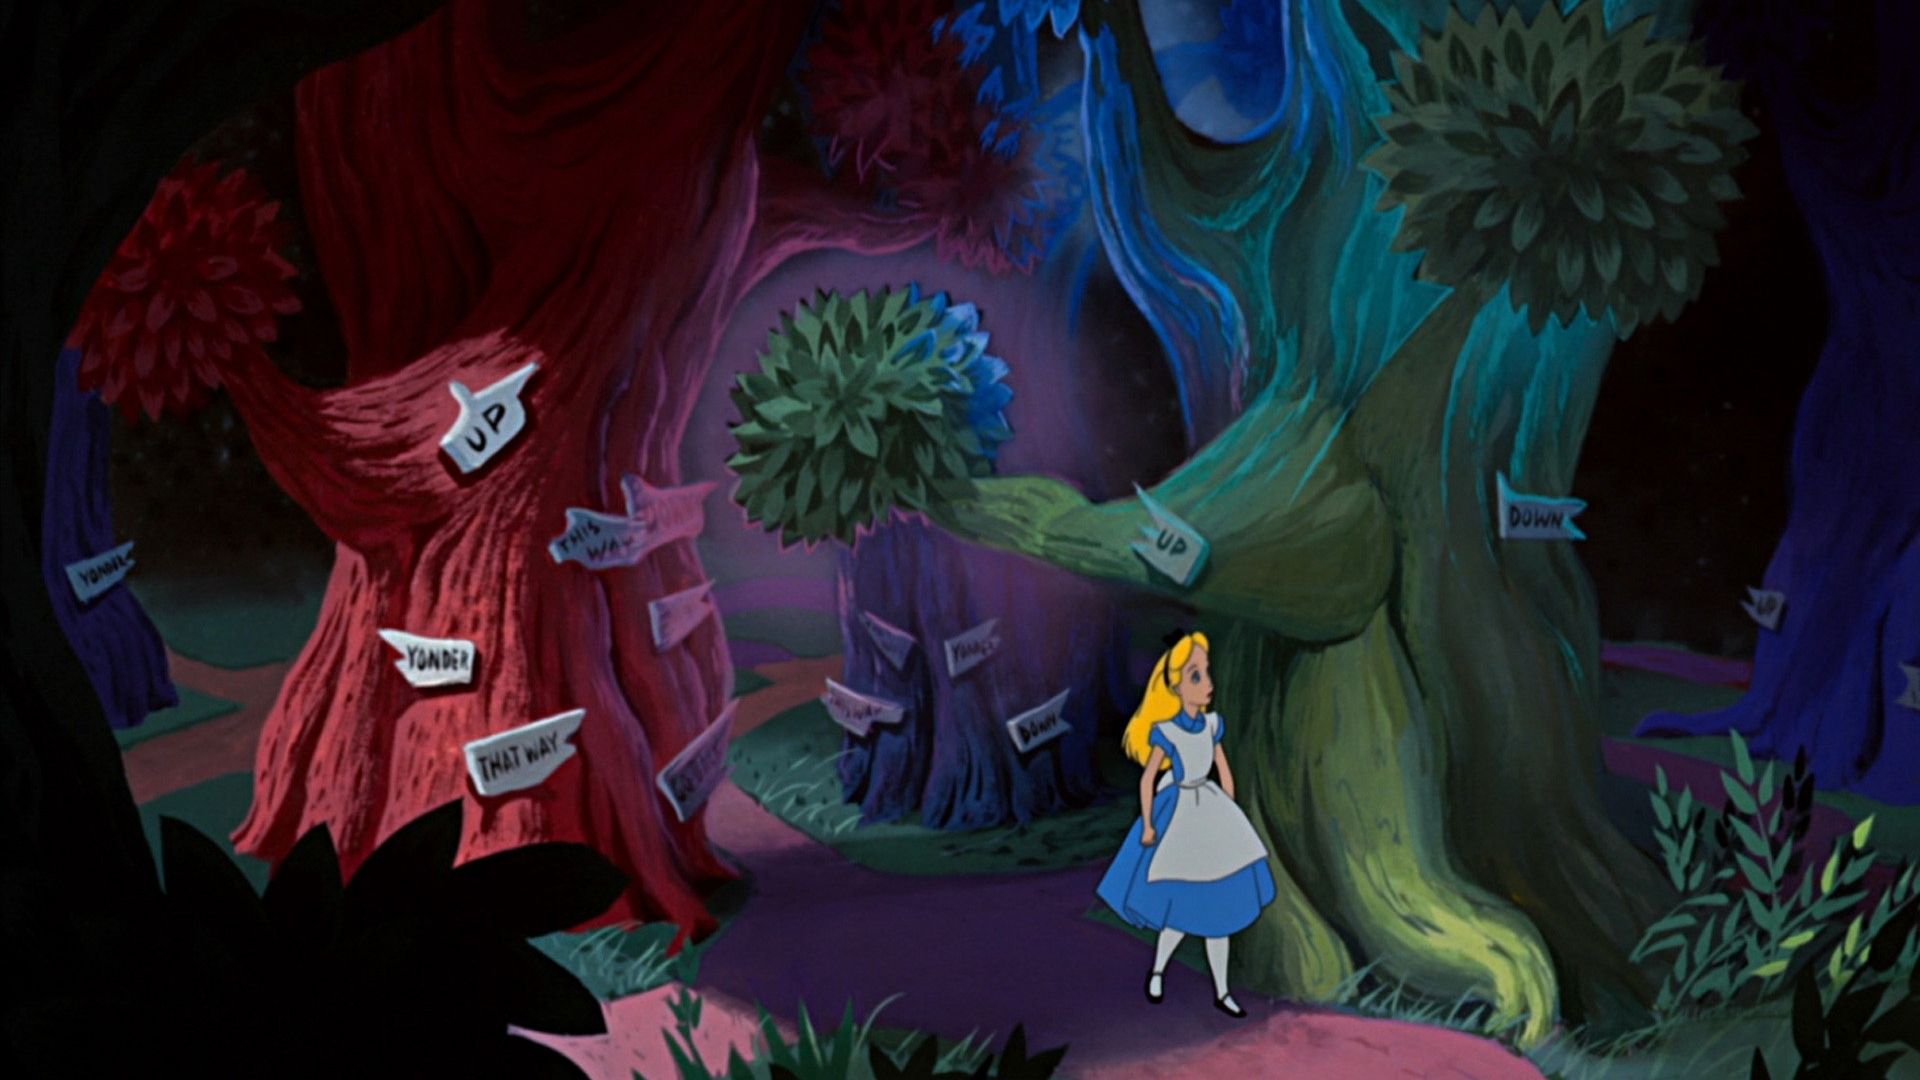 Trippy Alice In Wonderland Art Wallpapers